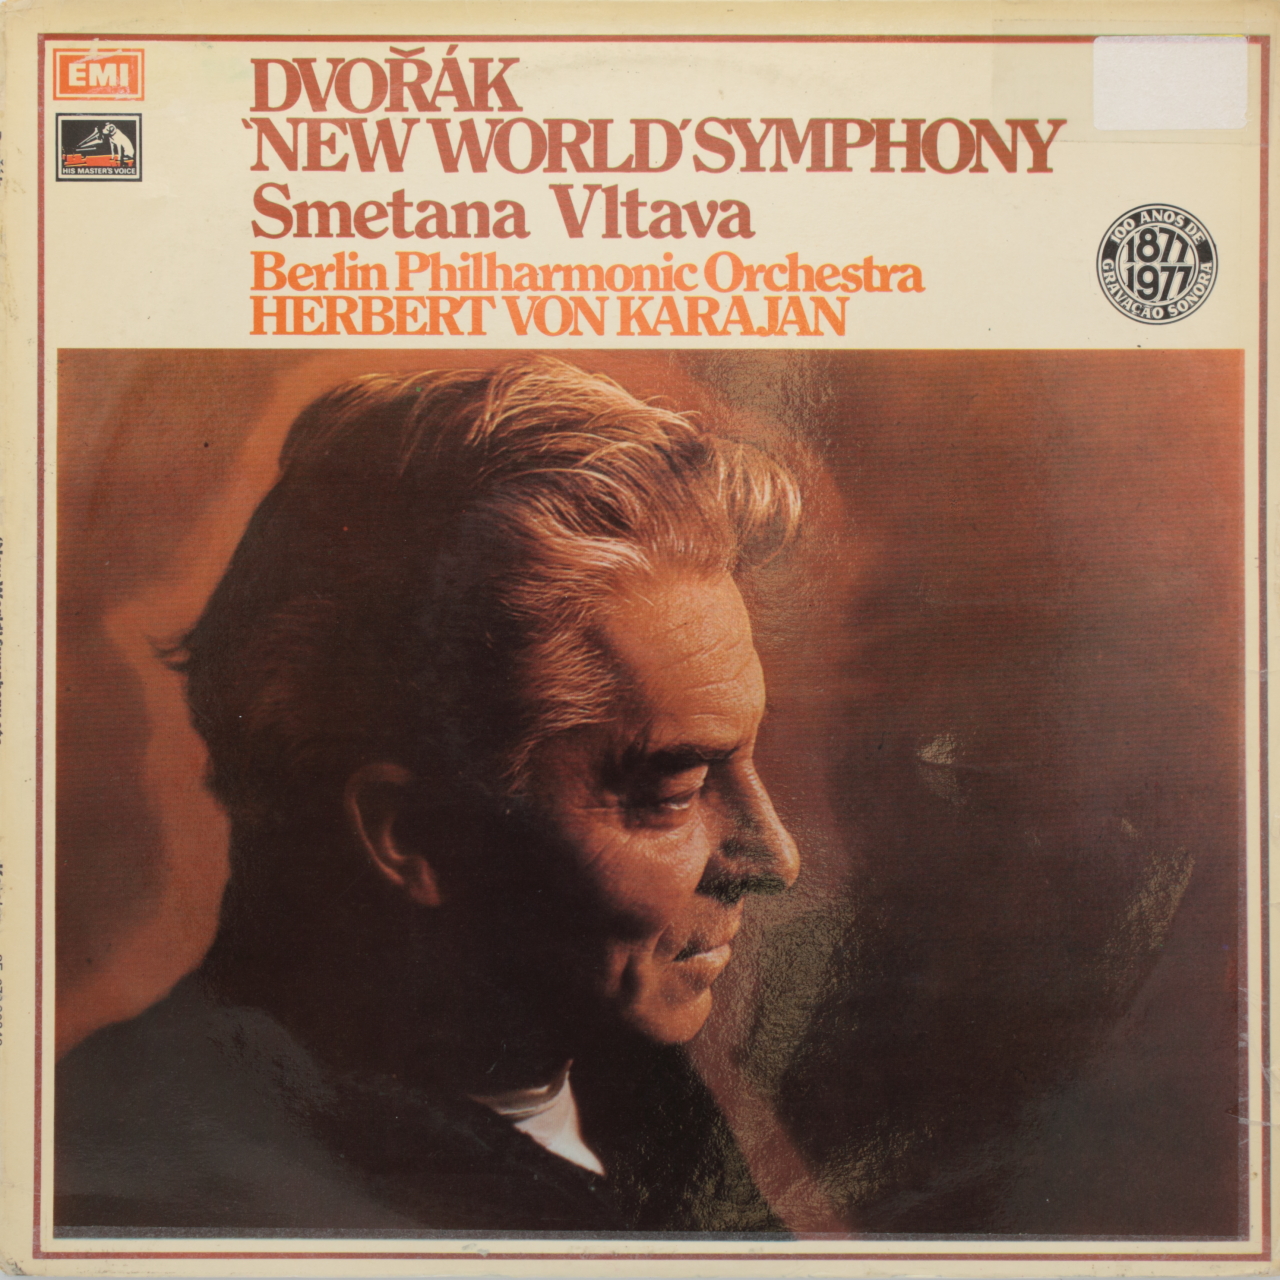 Dvorak: New Worlds Symphony / Smetana: Vltava